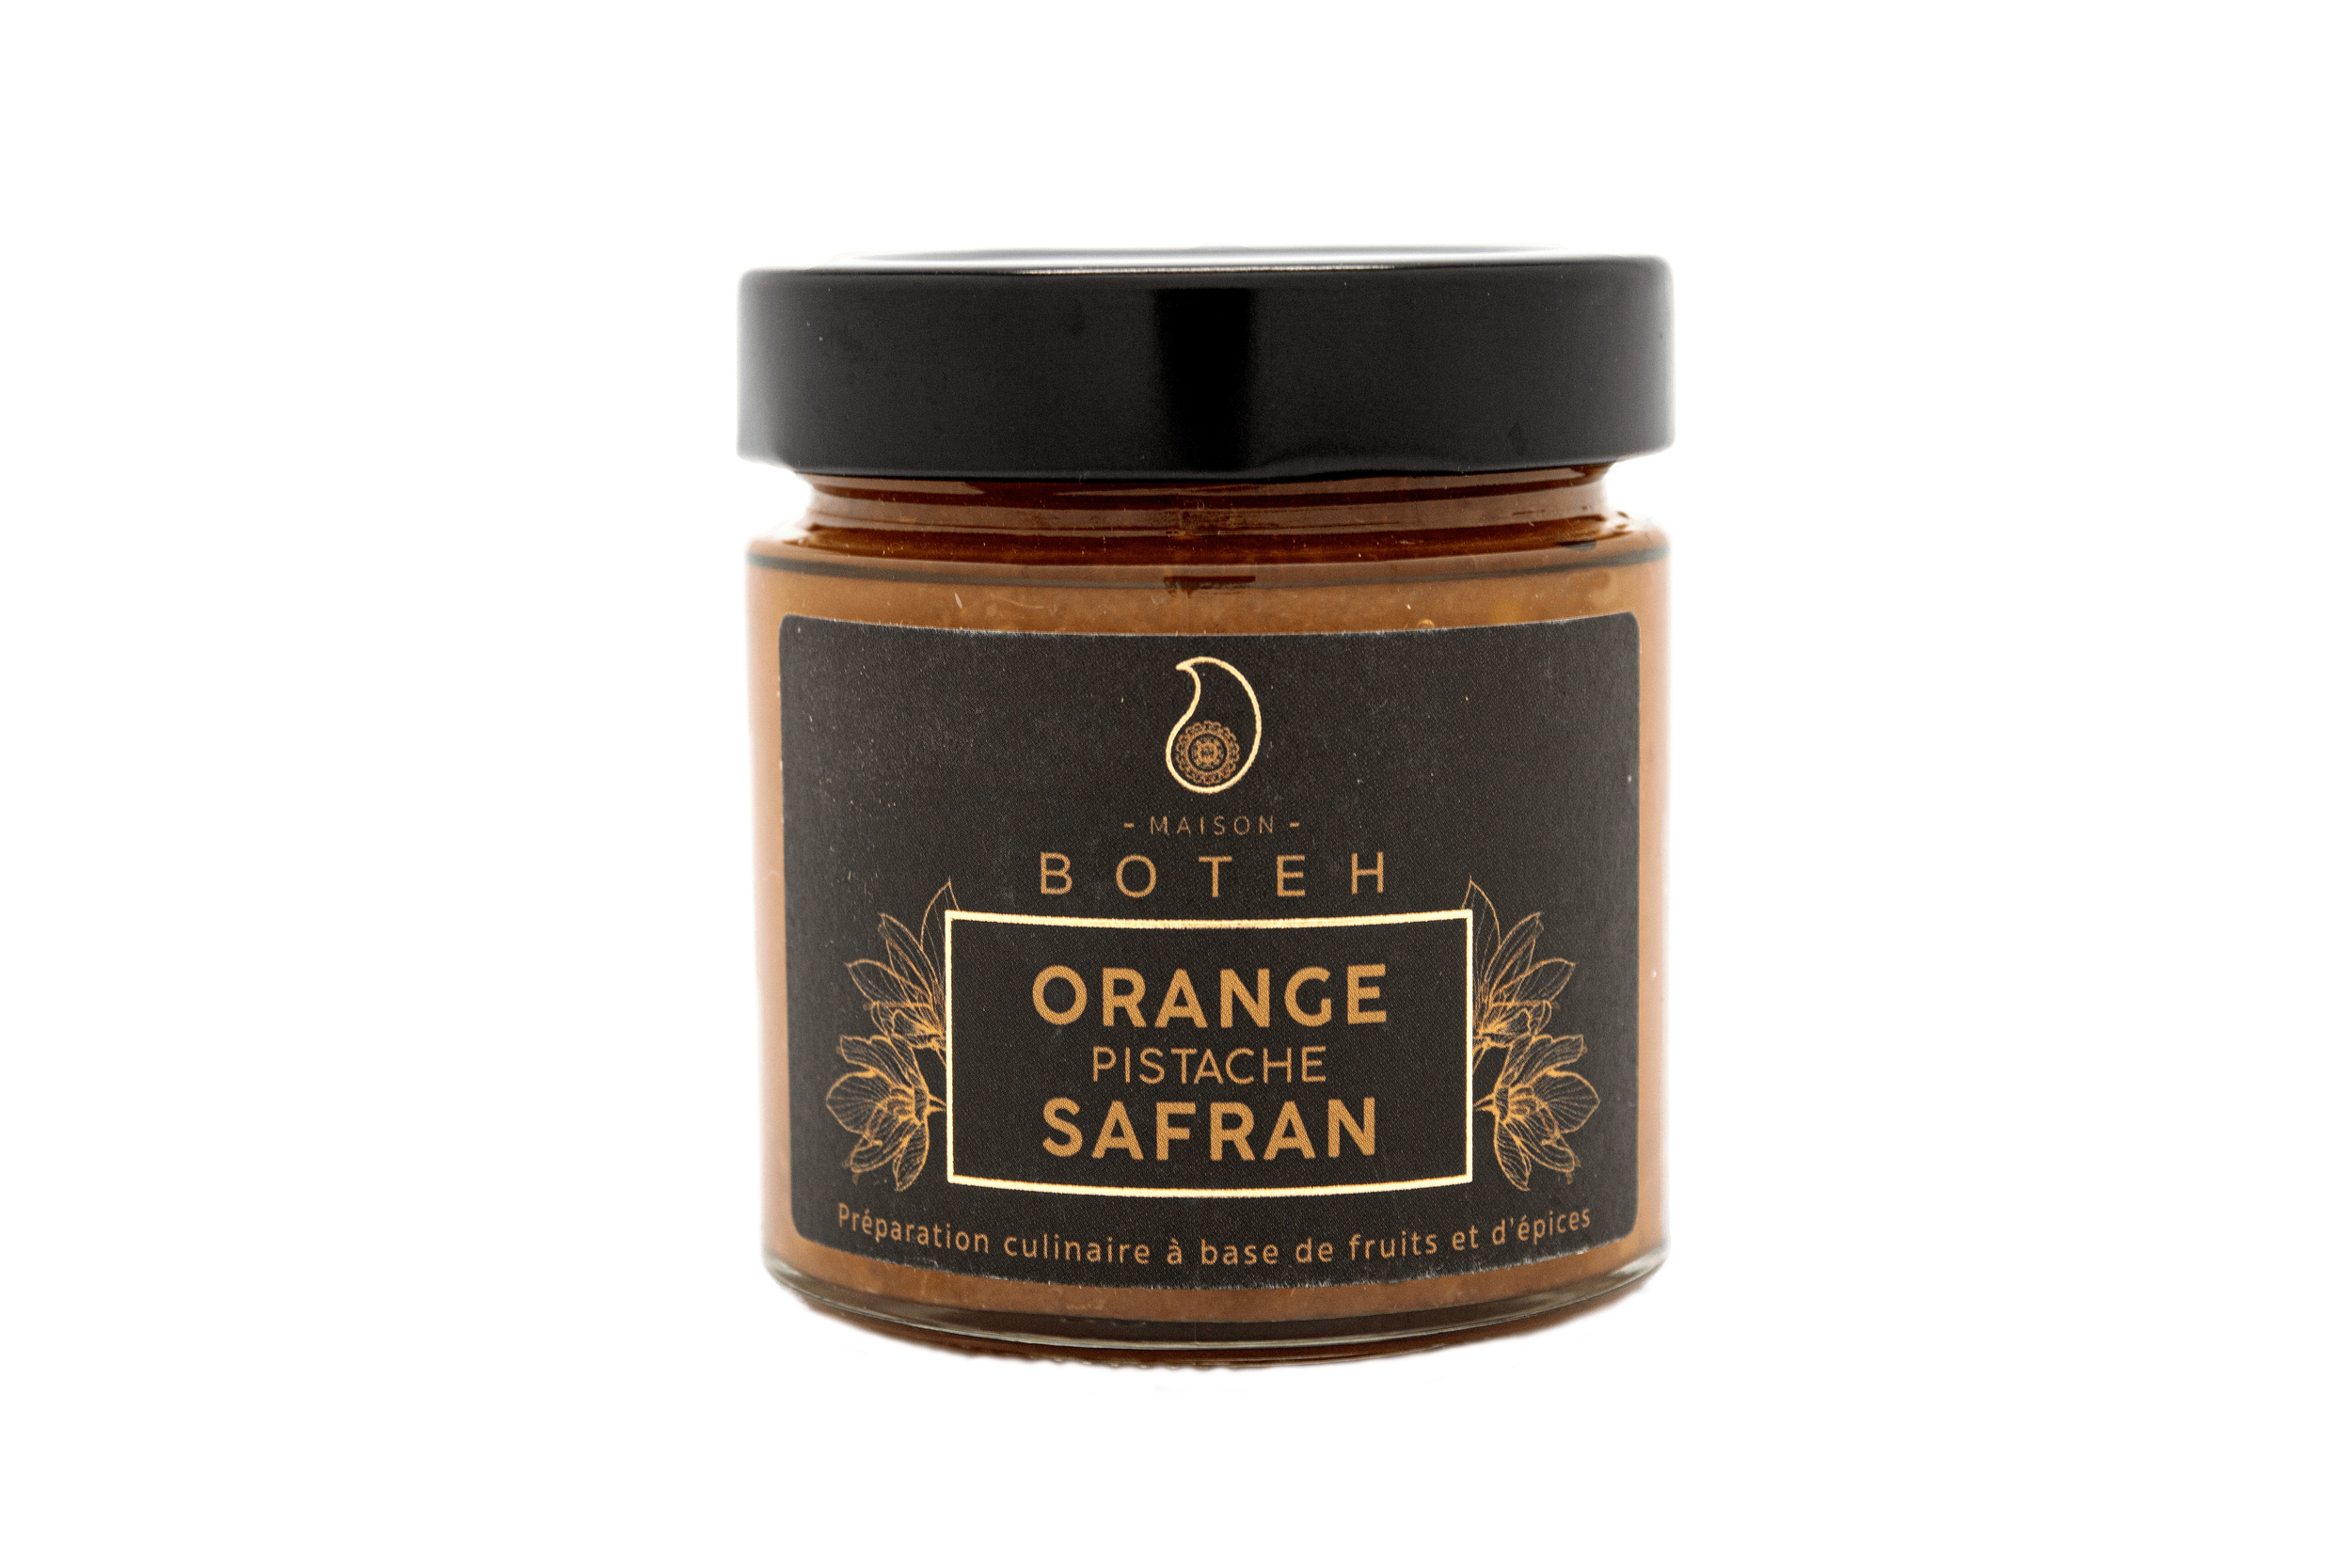 Orange-pistache-safran -Maison BOTEH